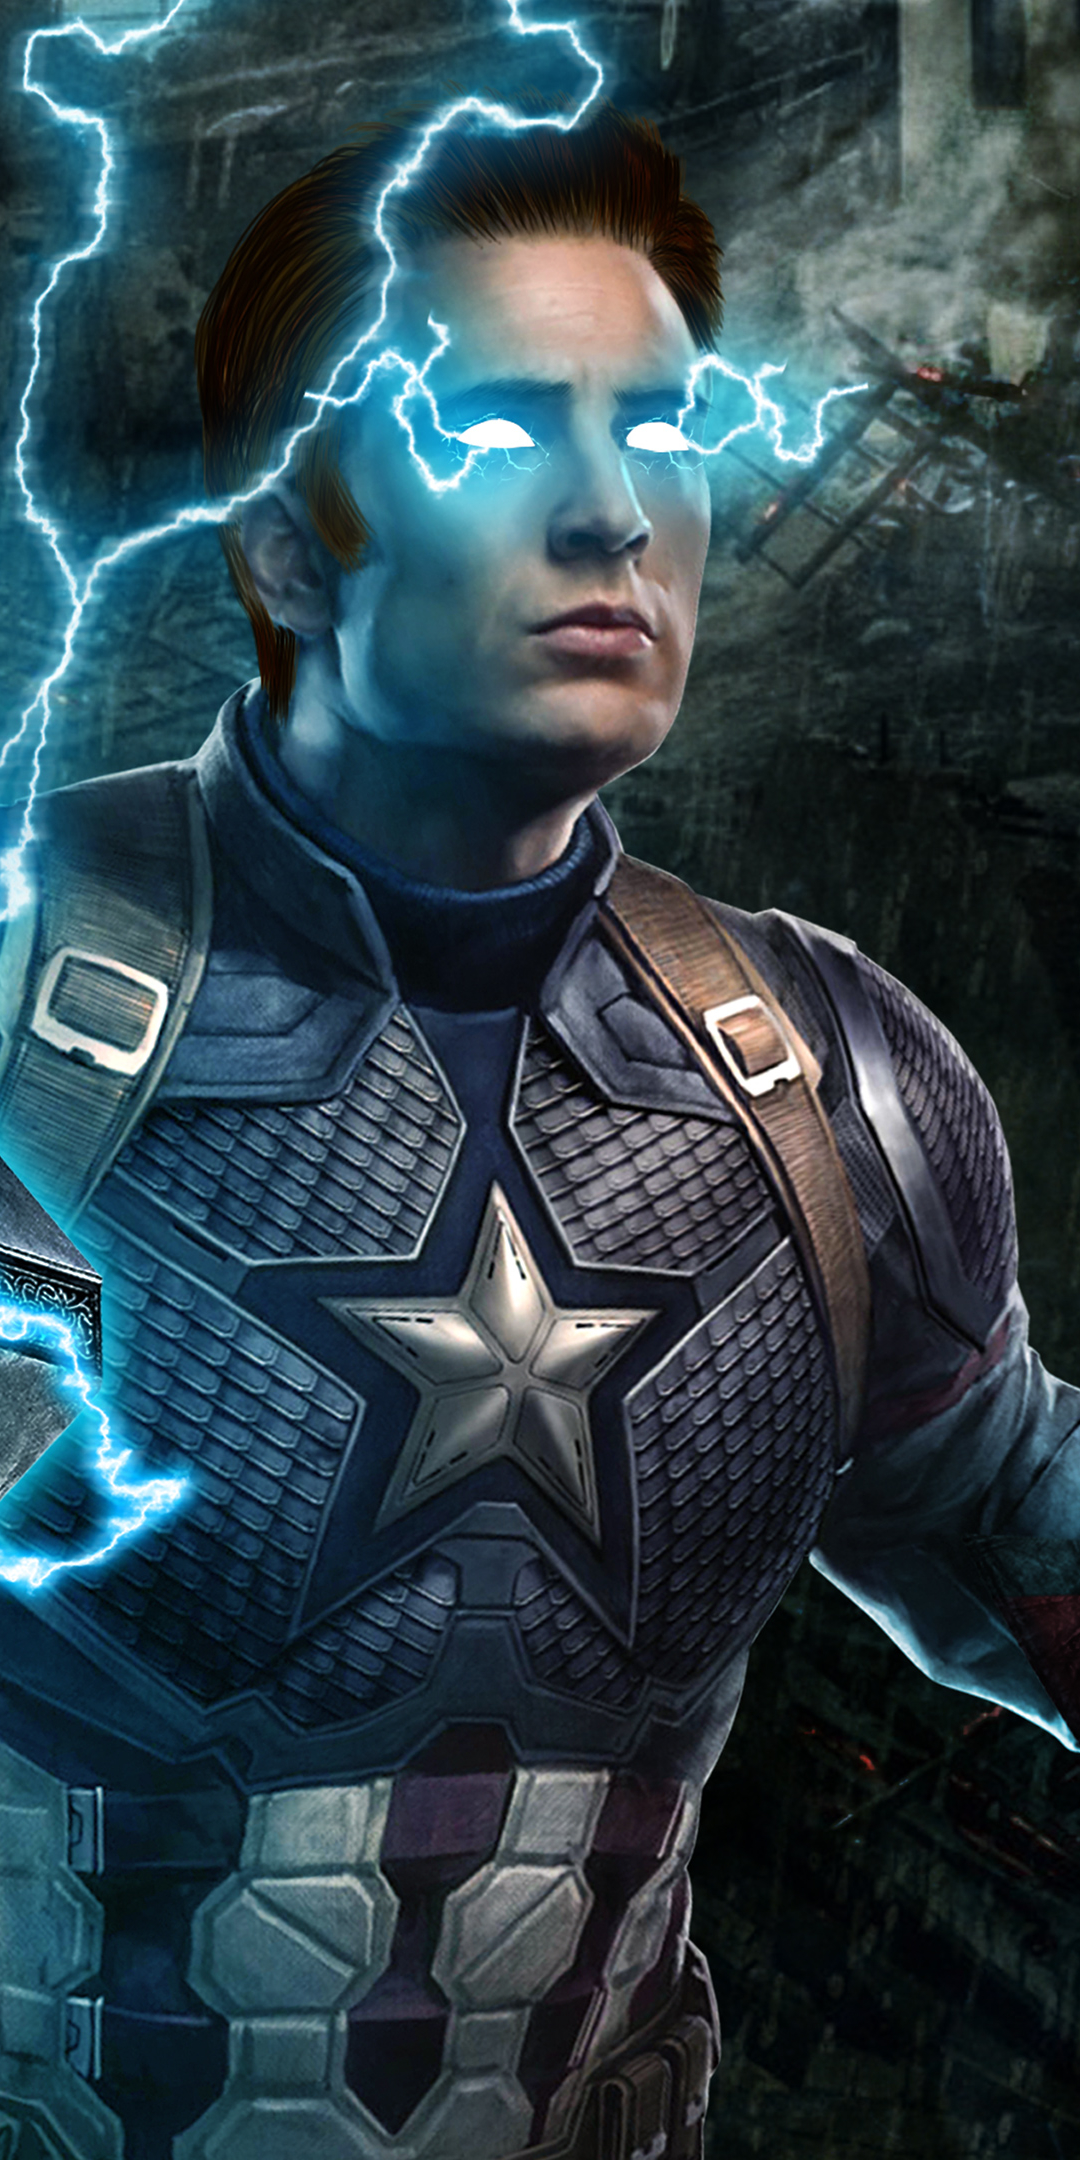 Descarga gratuita de fondo de pantalla para móvil de Los Vengadores, Películas, Capitan América, Vengadores: Endgame, Capitan America.